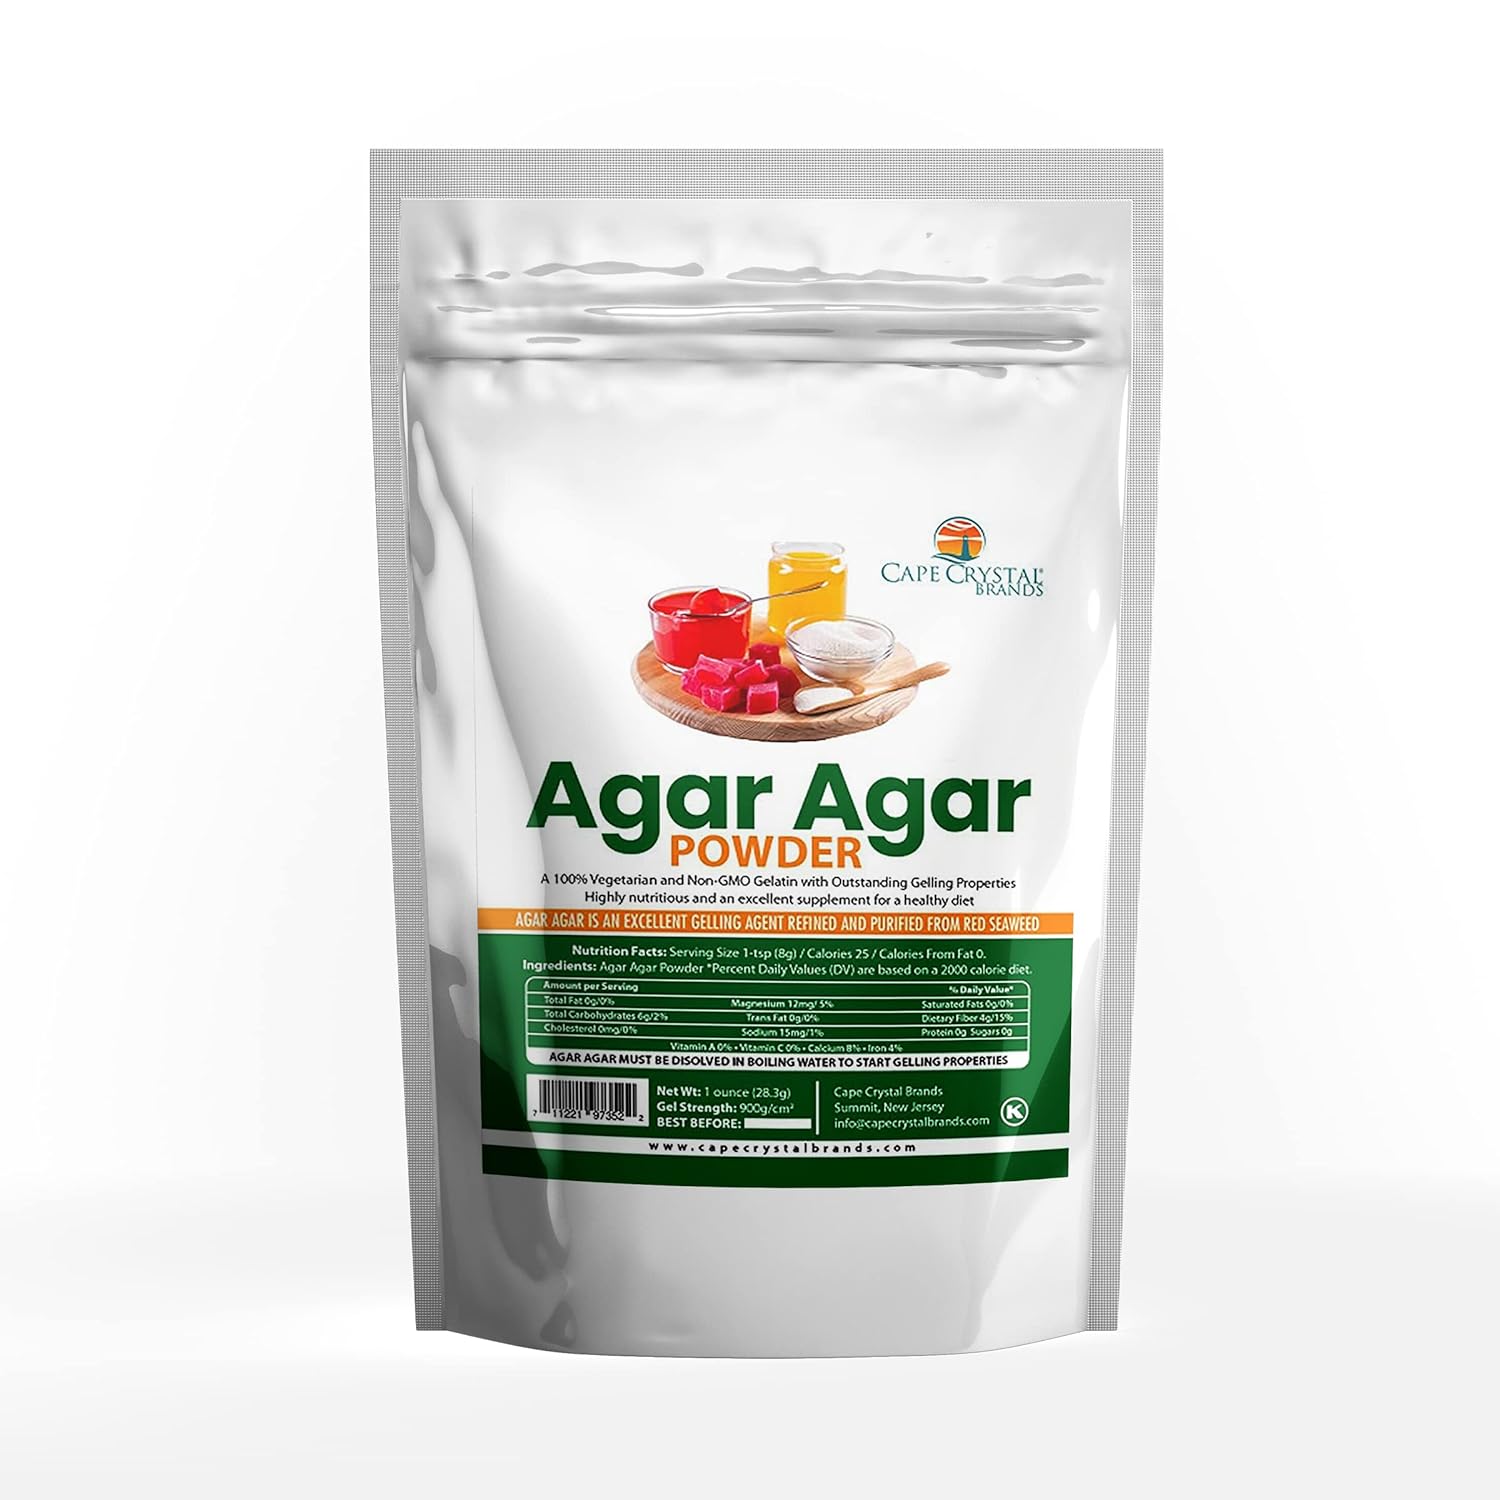 Using Agar Agar Powder in Your Recipes: Useful Tips - Cape Crystal Brands